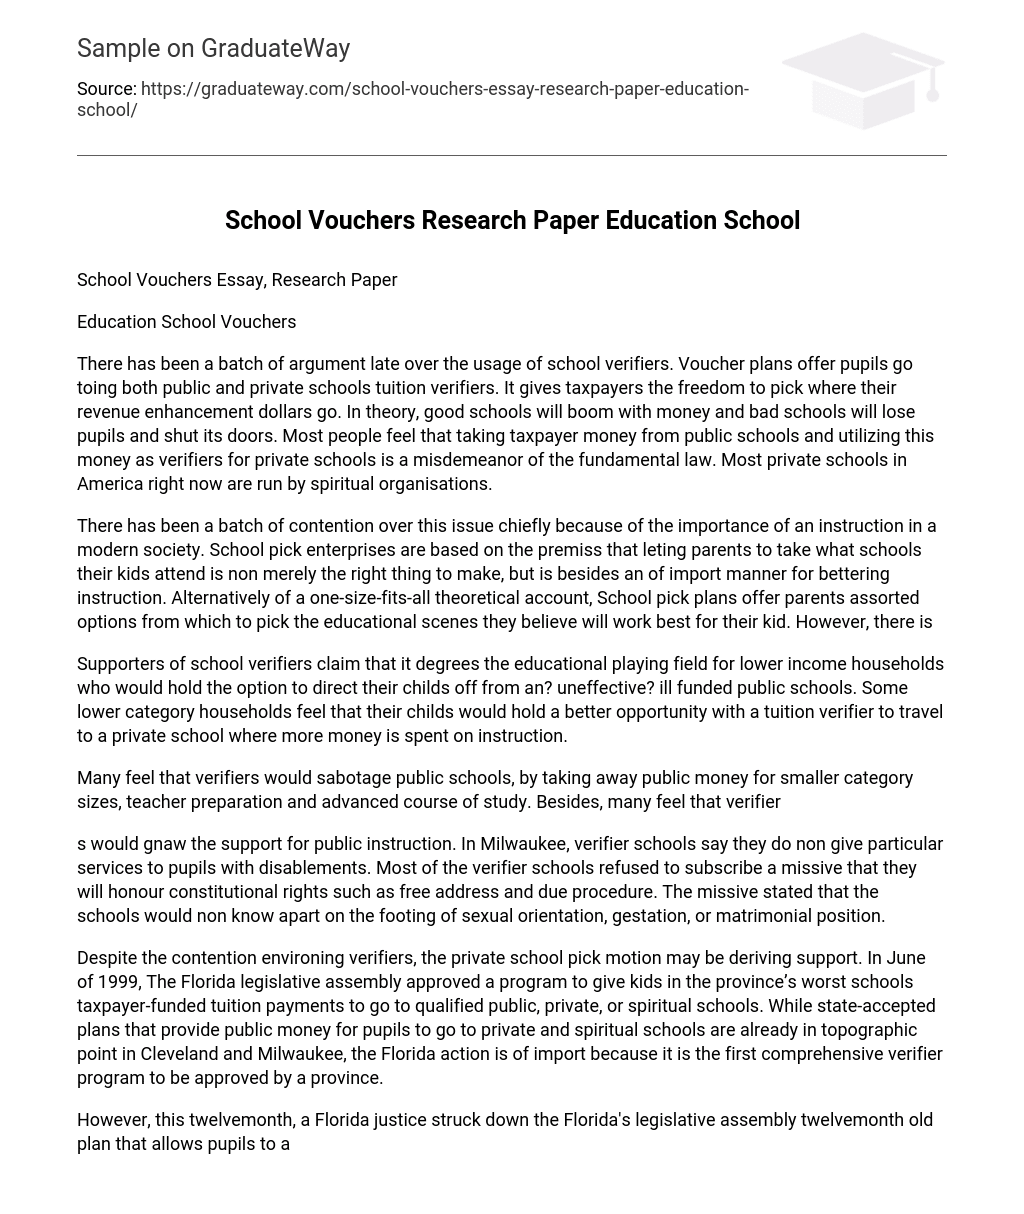 School Vouchers Research Paper Education School